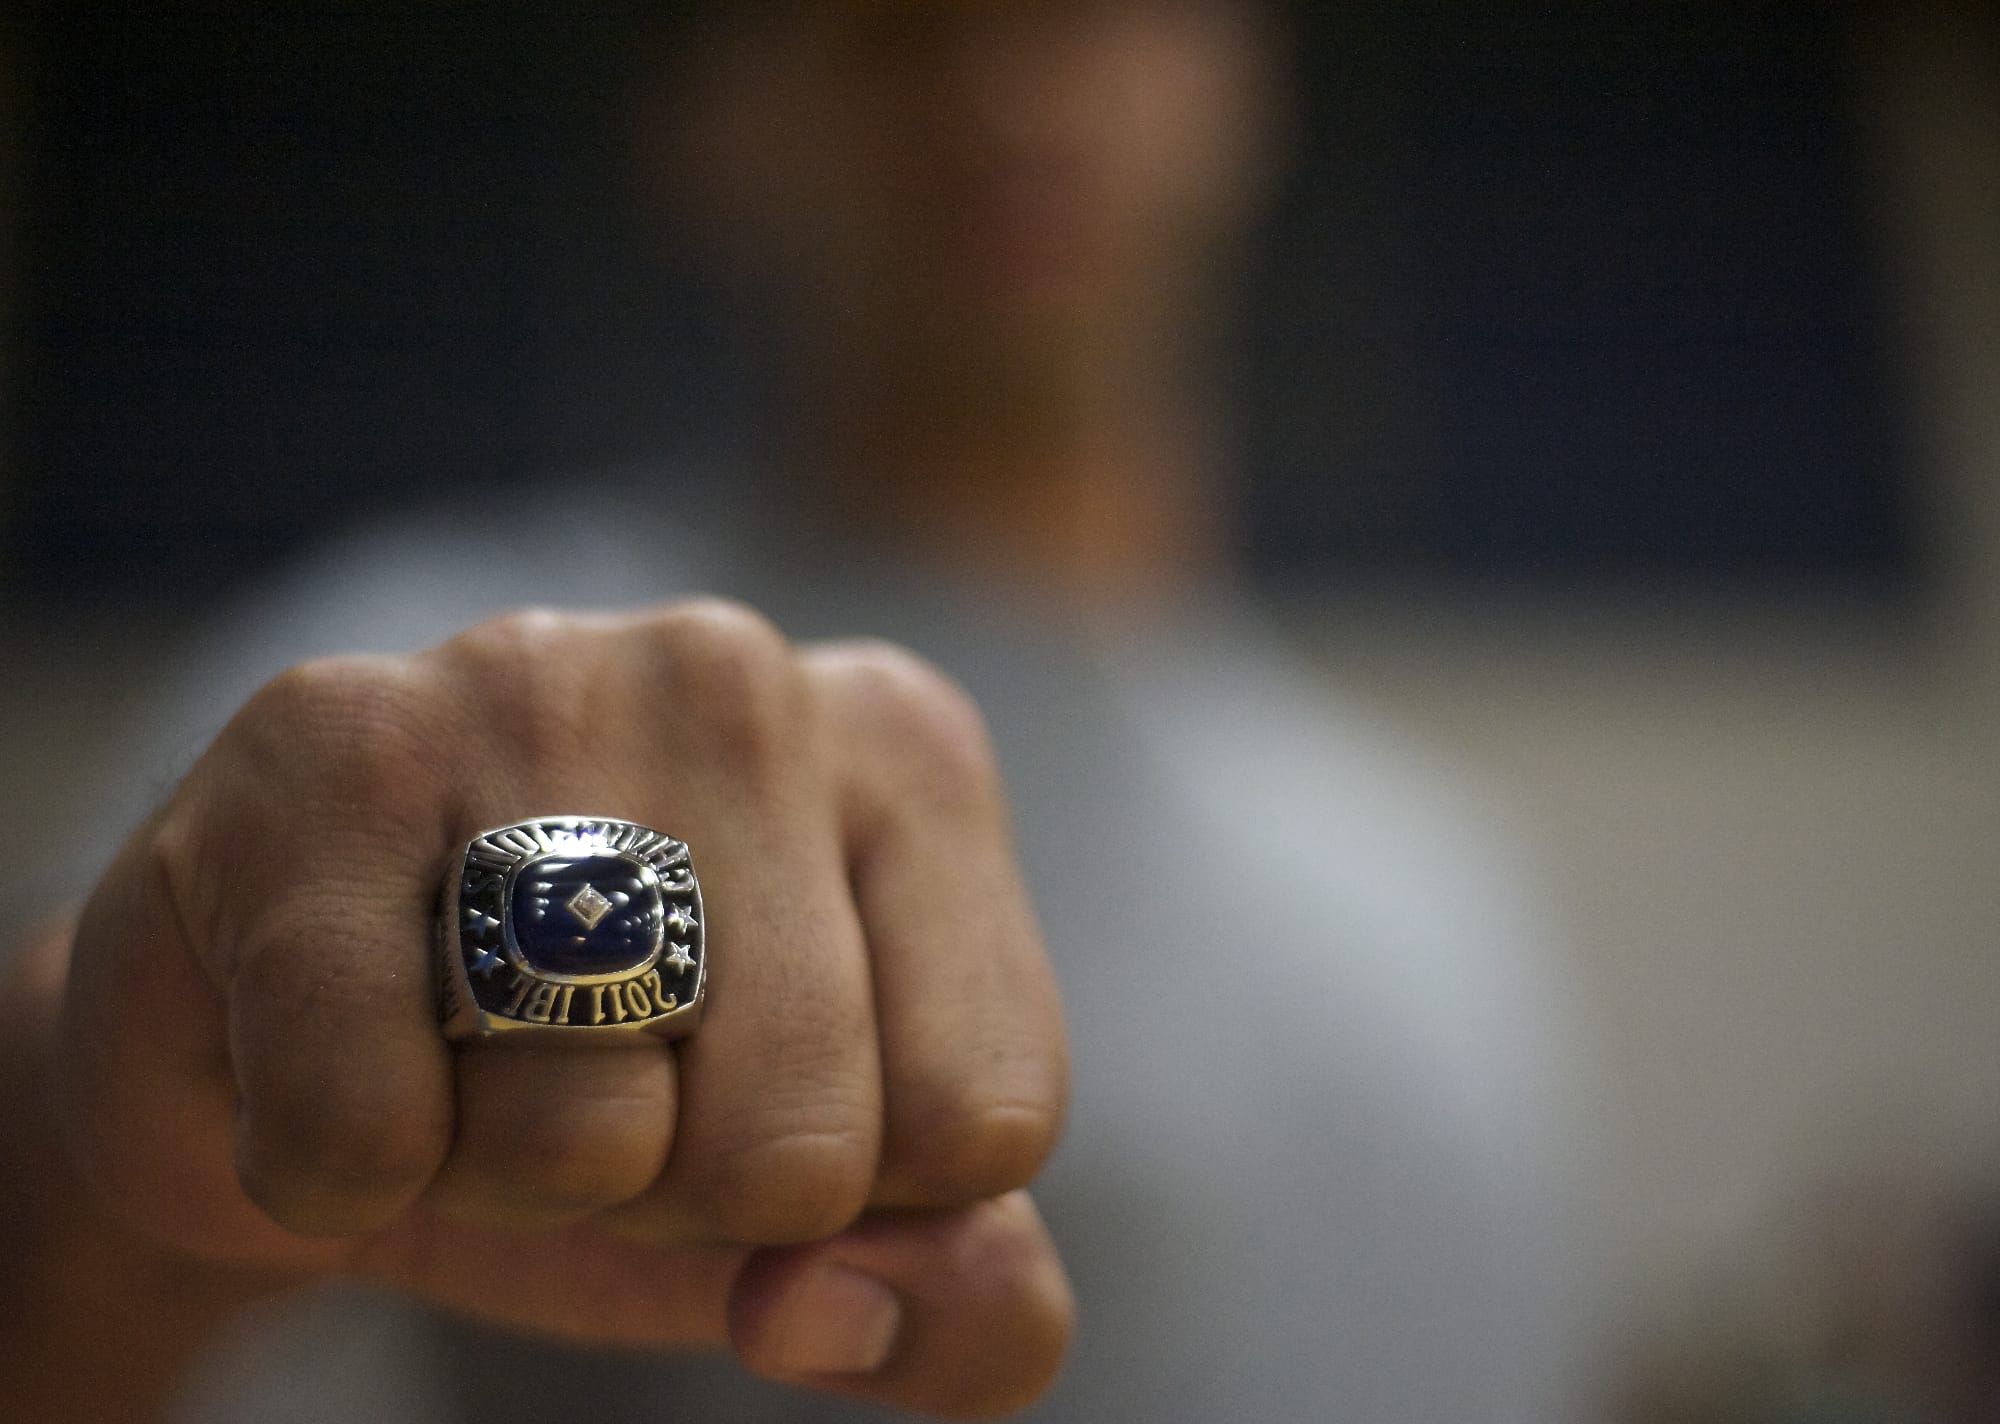 2011 IBL playoff MVP Jake Carlisle shows off his championship ring.